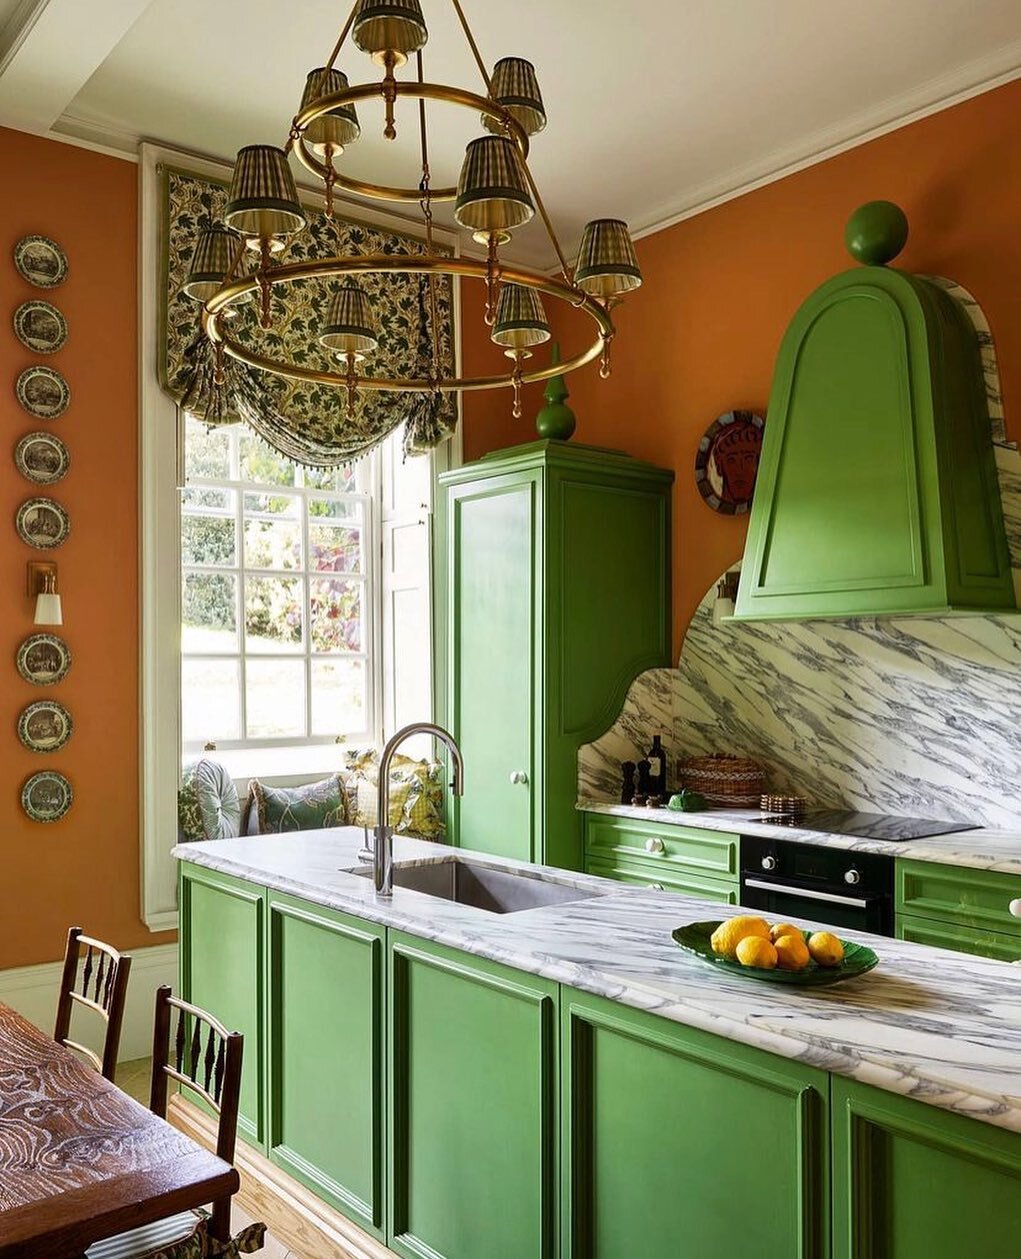 #KitchenInspo today is this dreamy orange and green kitchen from Martin Brudnizki&rsquo;s Sussex home 💚🧡

#kitchen #kitchendesign #interiordesign #kitchenrenovation #bespokekitchen #kitcheninspiration #homerenovation #homedesign